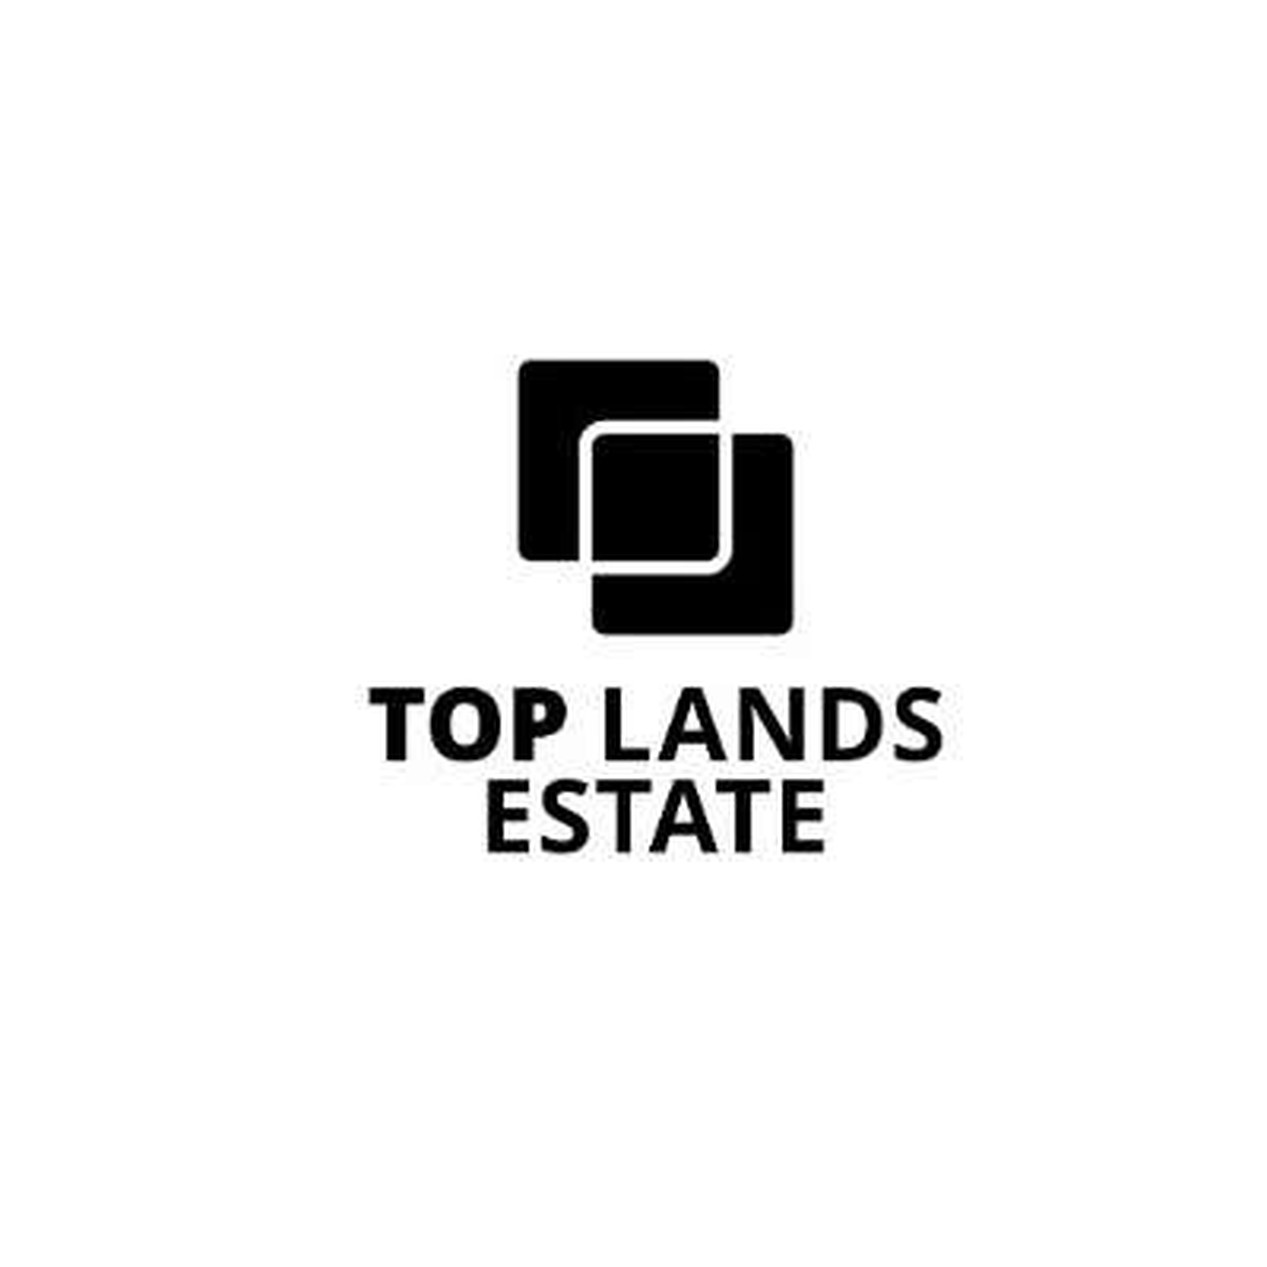 Sell Your Land Fast Online | Toplandsestate.com